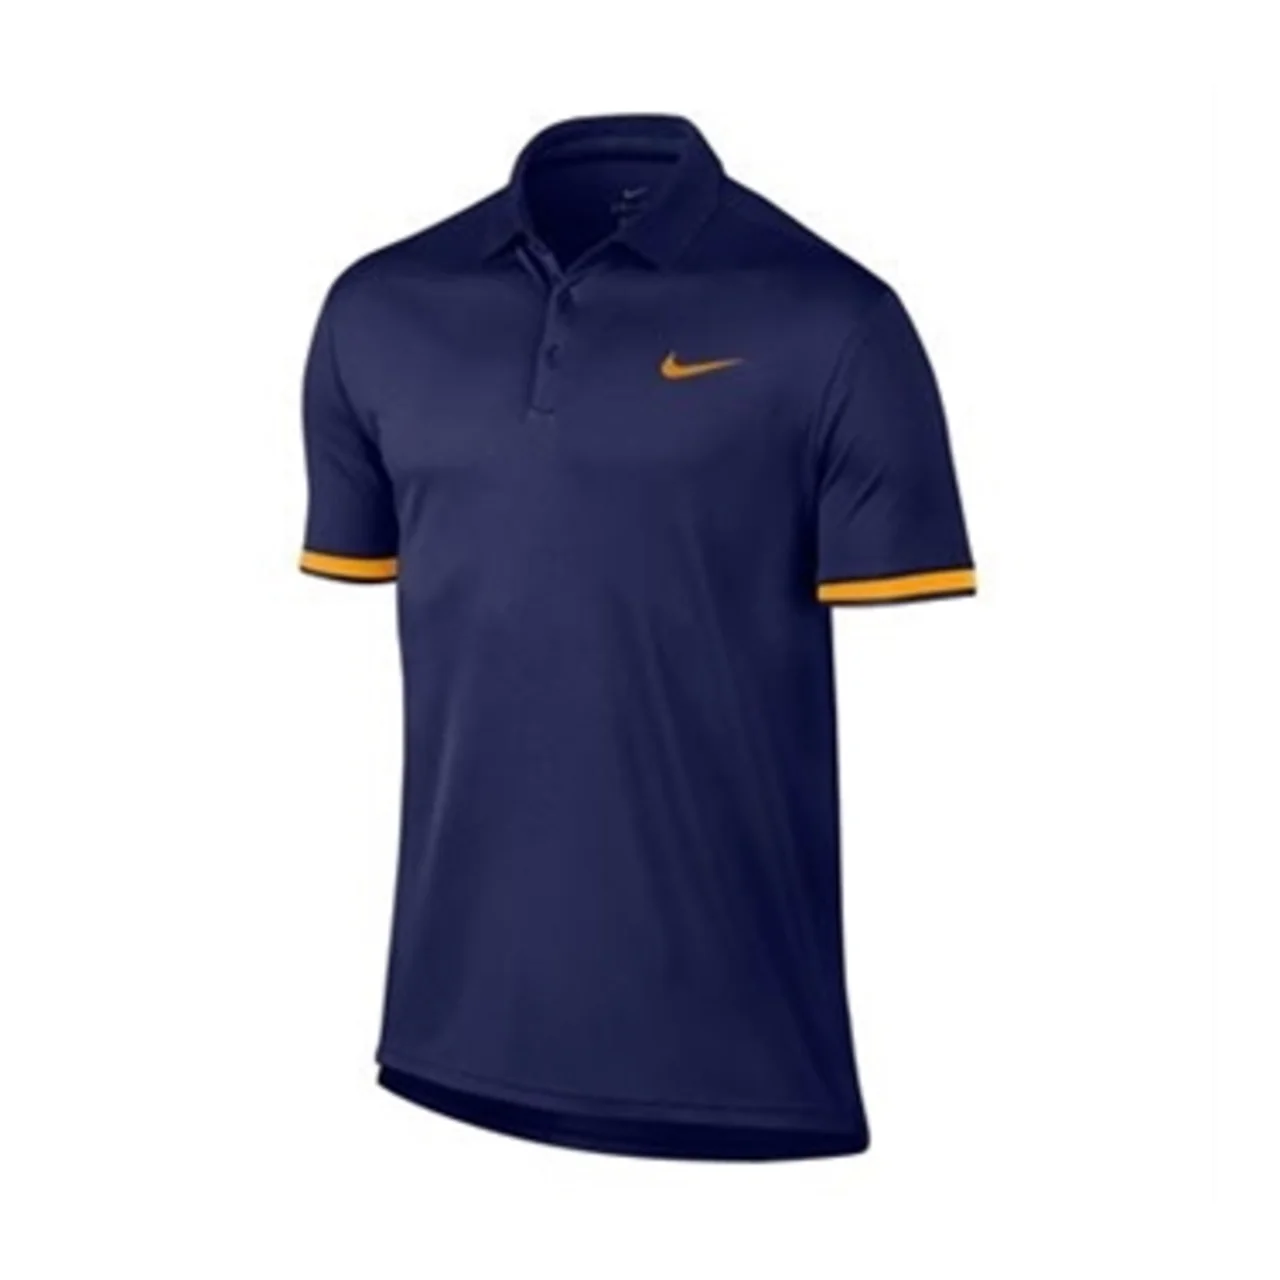 Nike Dry Polo Team Blue/Orange